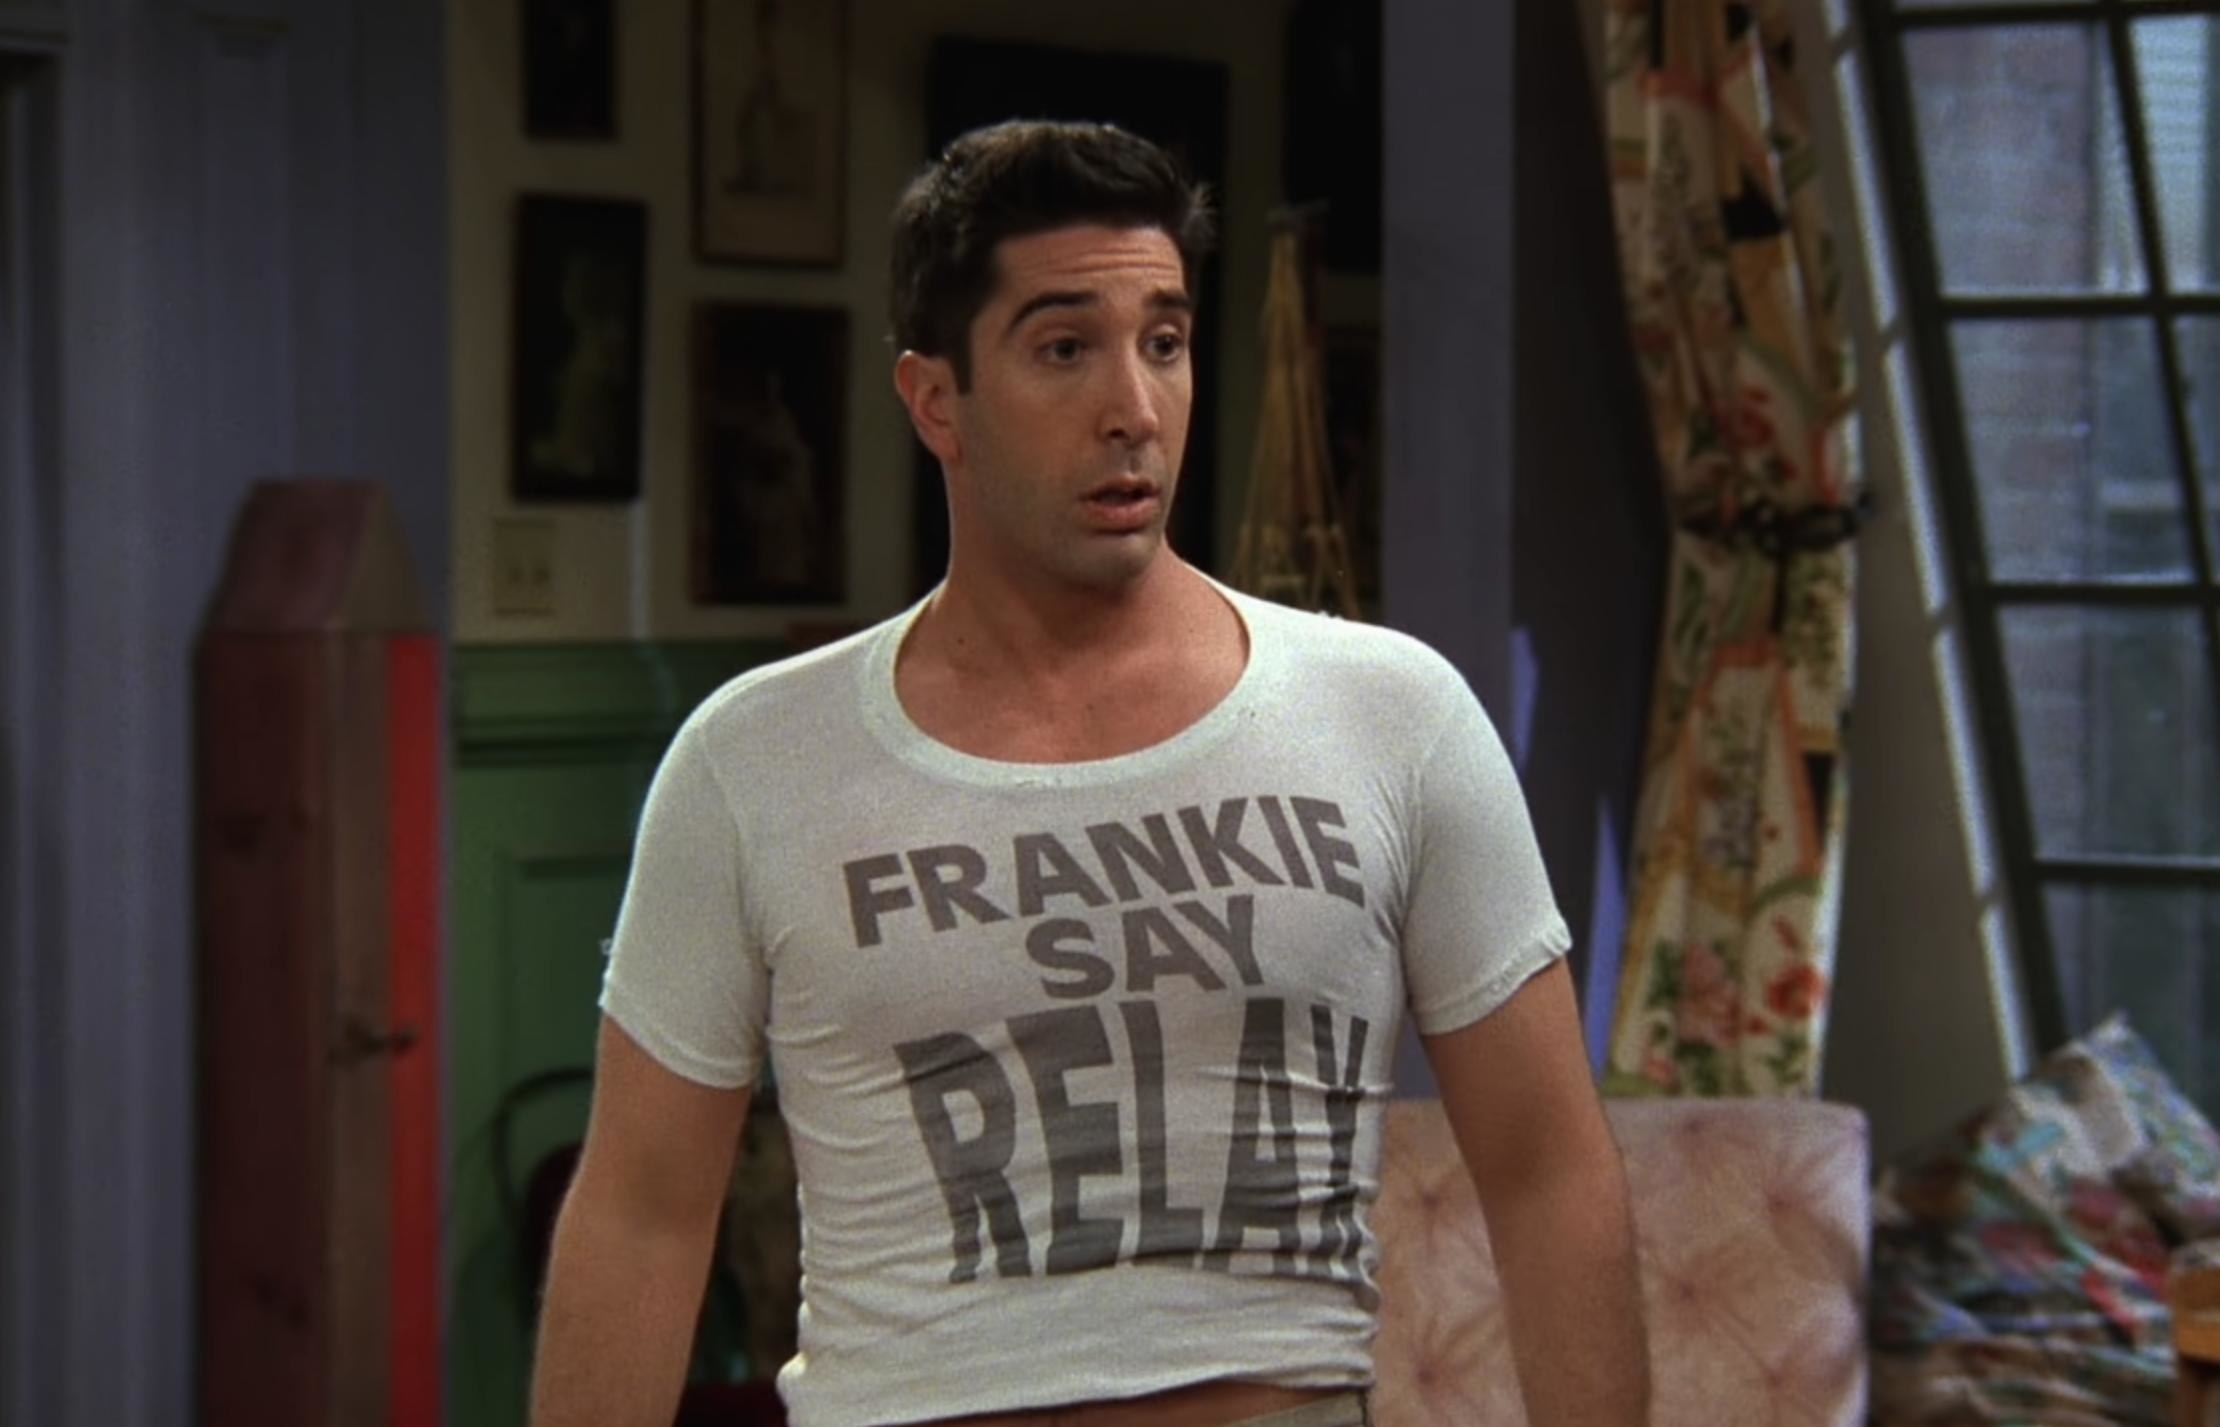 Ross from friends wearing an undersized T-Shirt